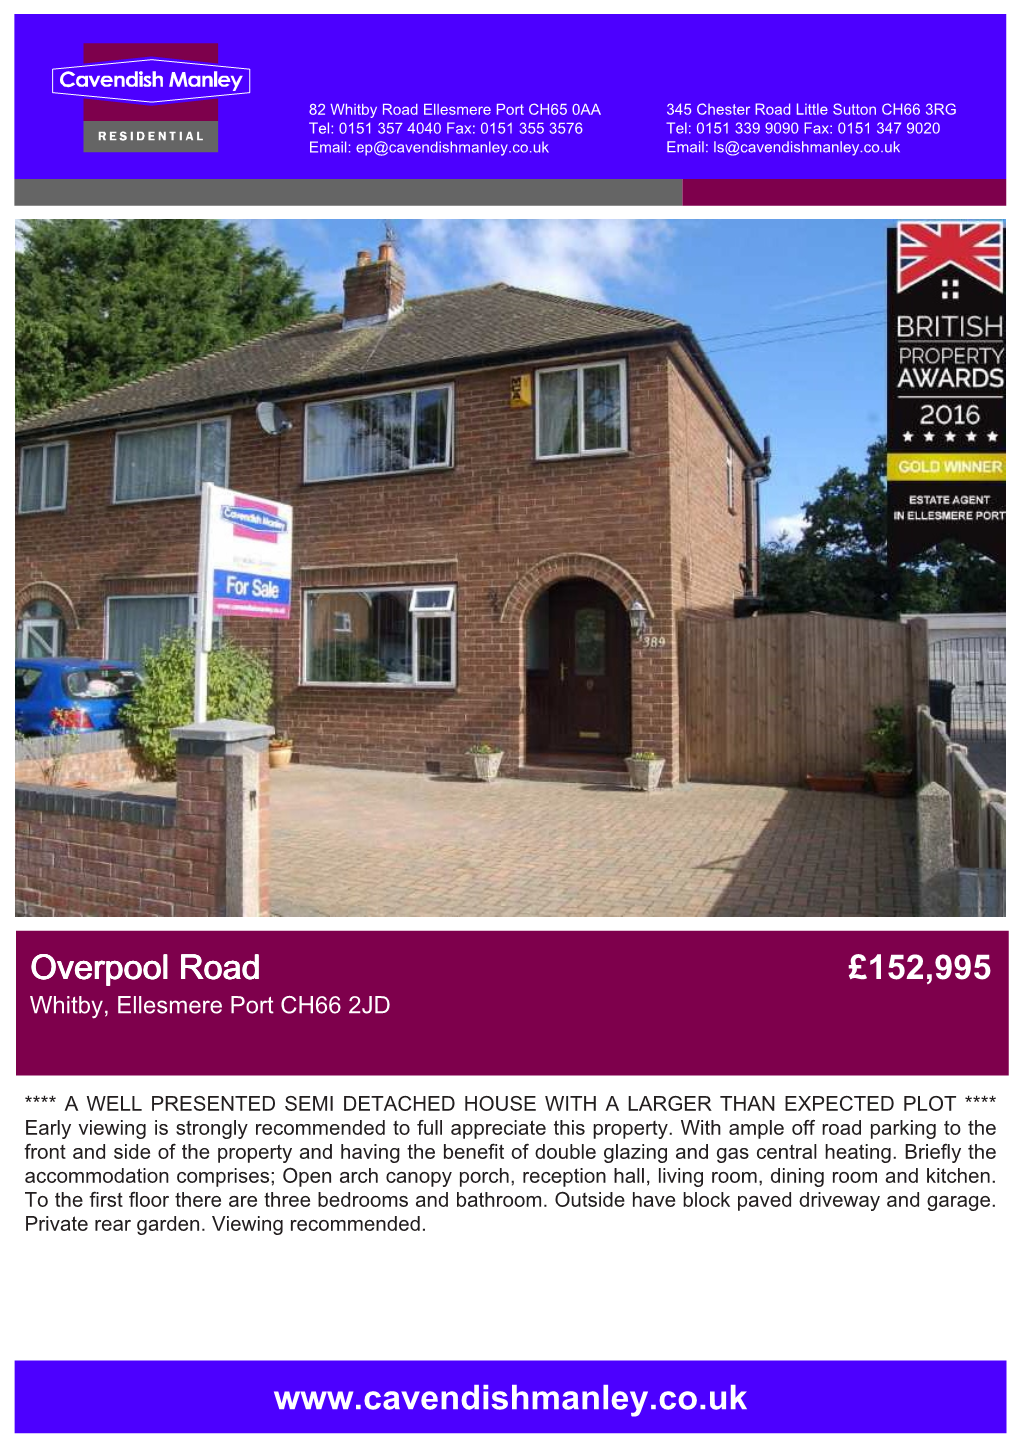 Overpool Road £152,995